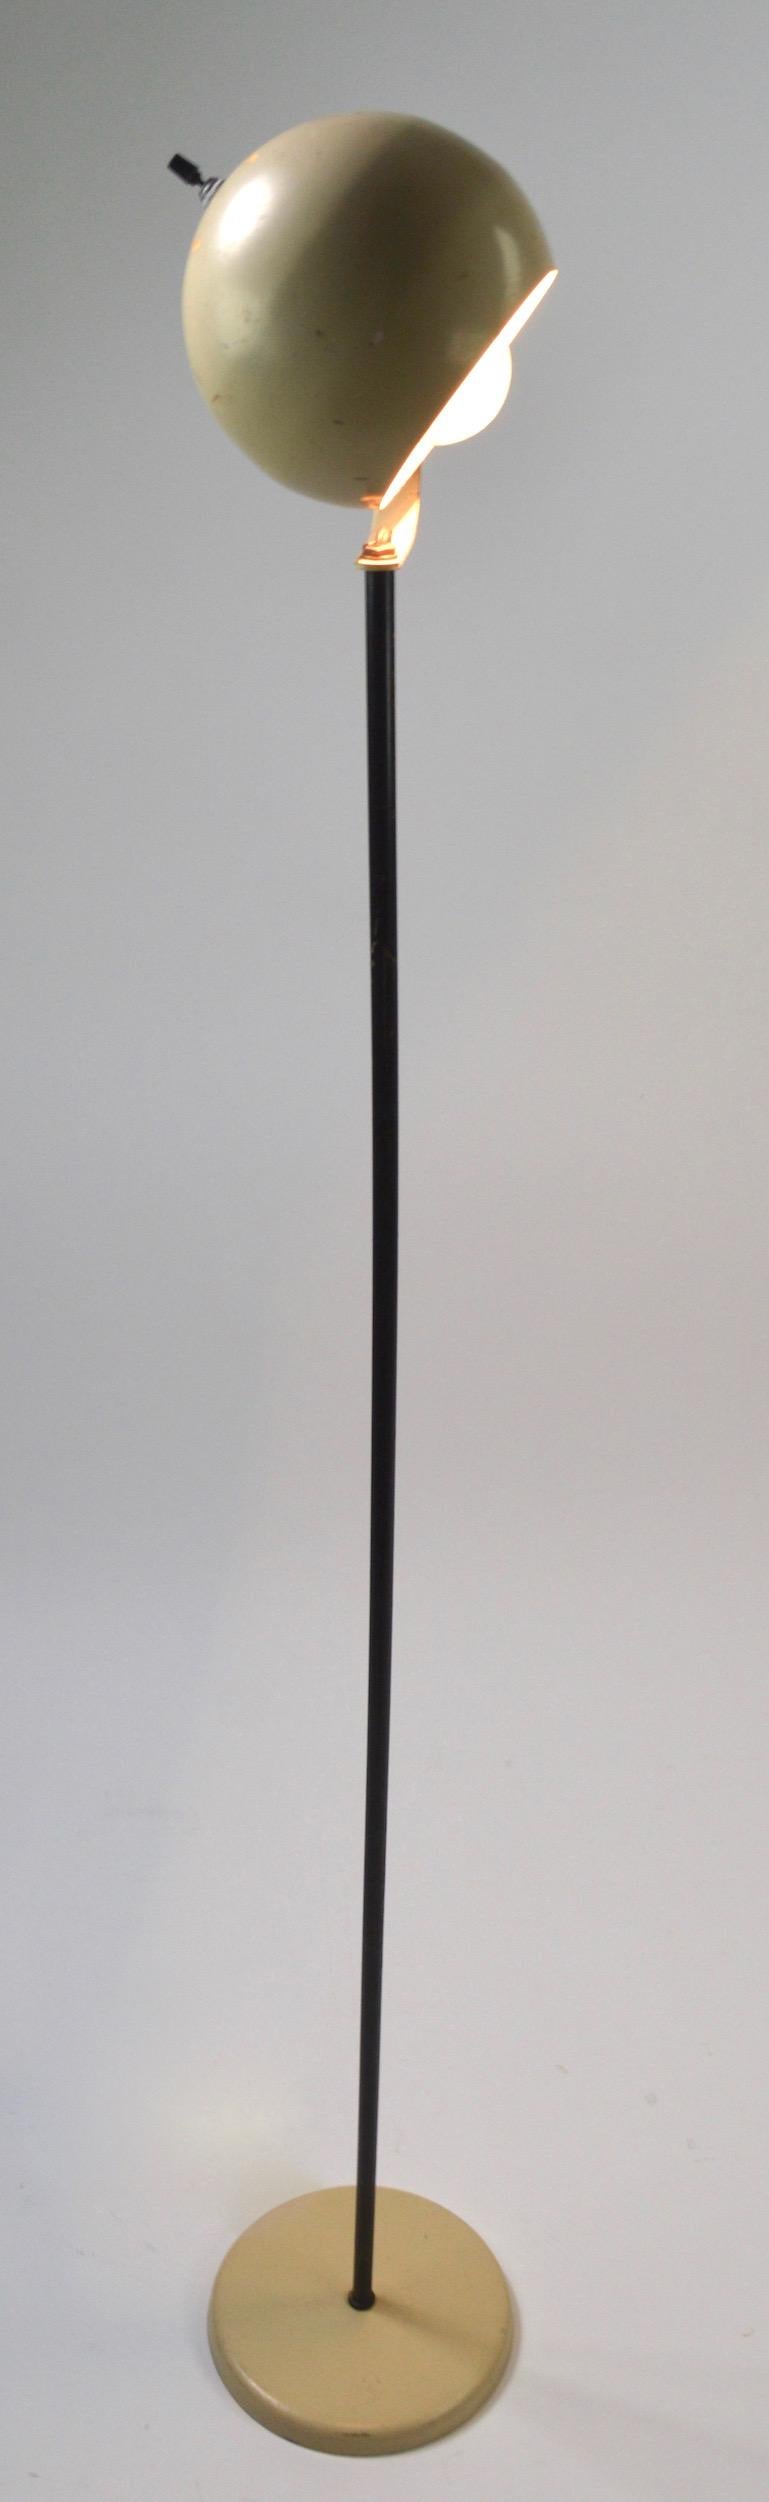 Mid-Century Modern Cream and Black Ball Shade Floor Lamp by Sonneman